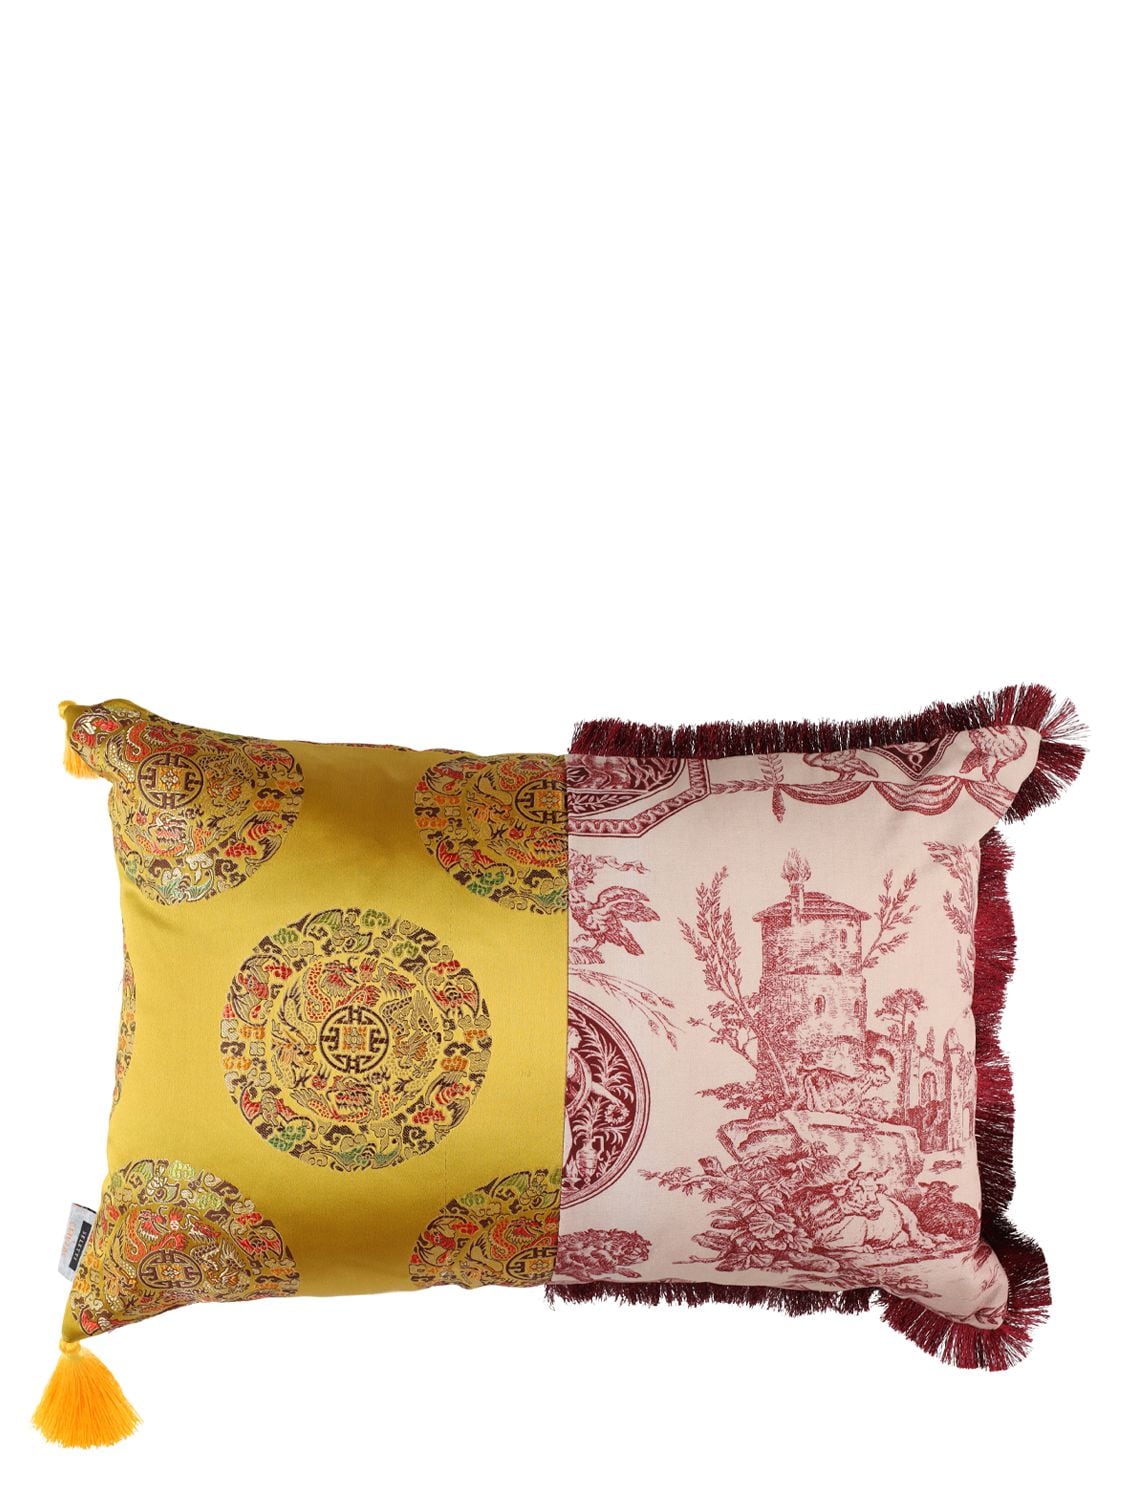 Seletti Ottavia Hybrid Cushion In Multicolor